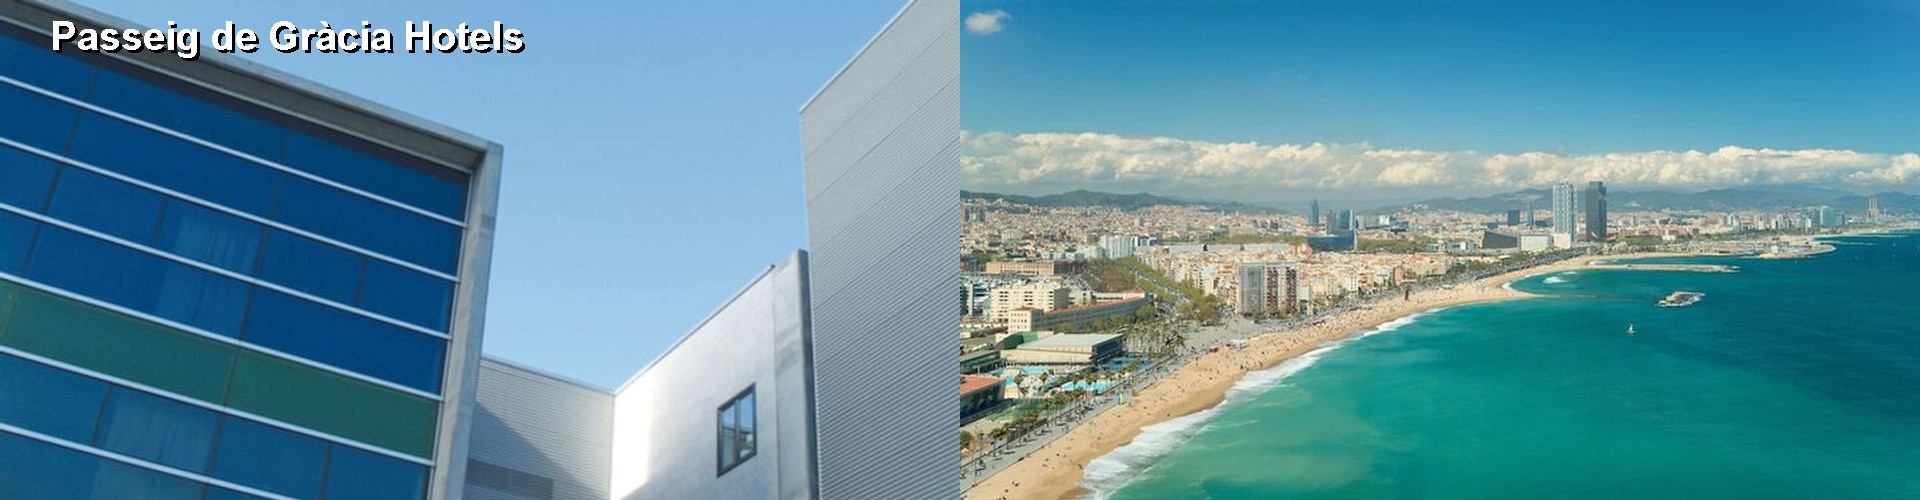 5 Best Hotels near Passeig de Gràcia